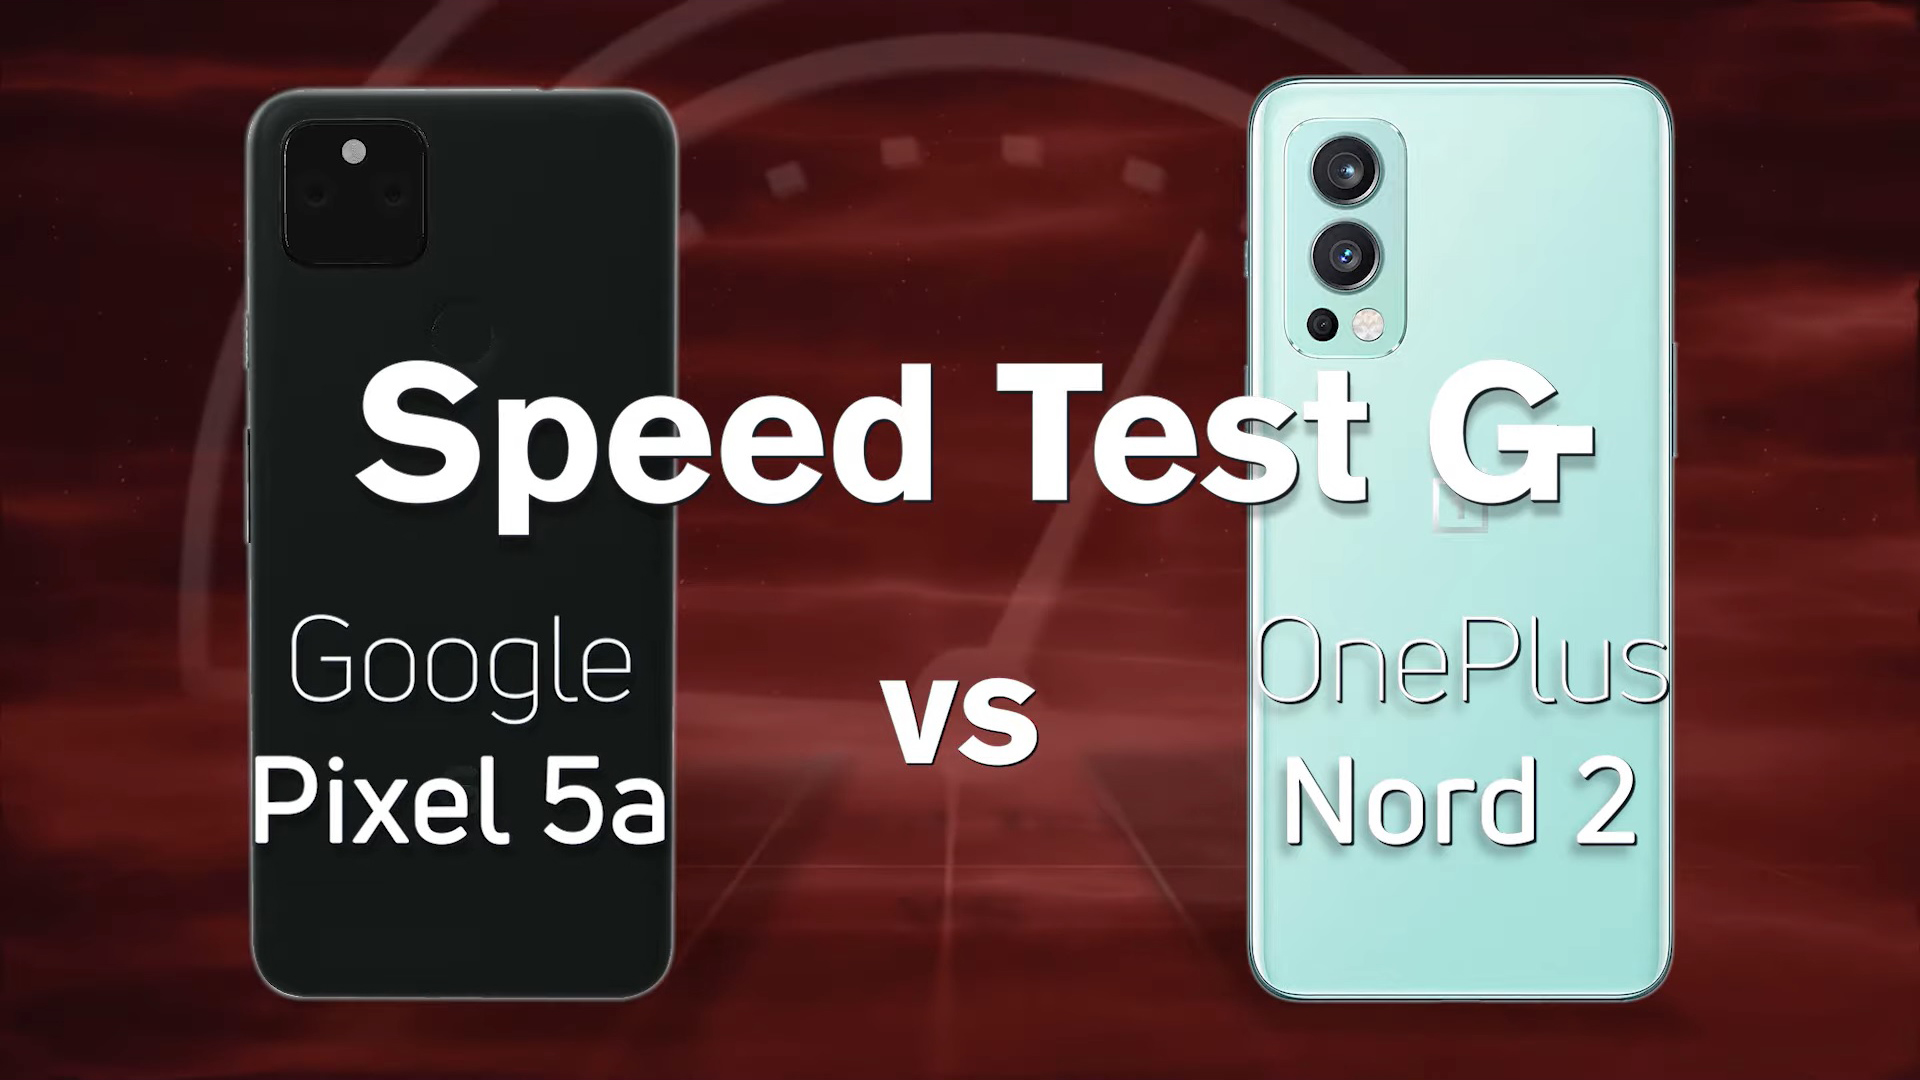 Speed Test G Google Pixel 5a vs OnePlus Nord 2